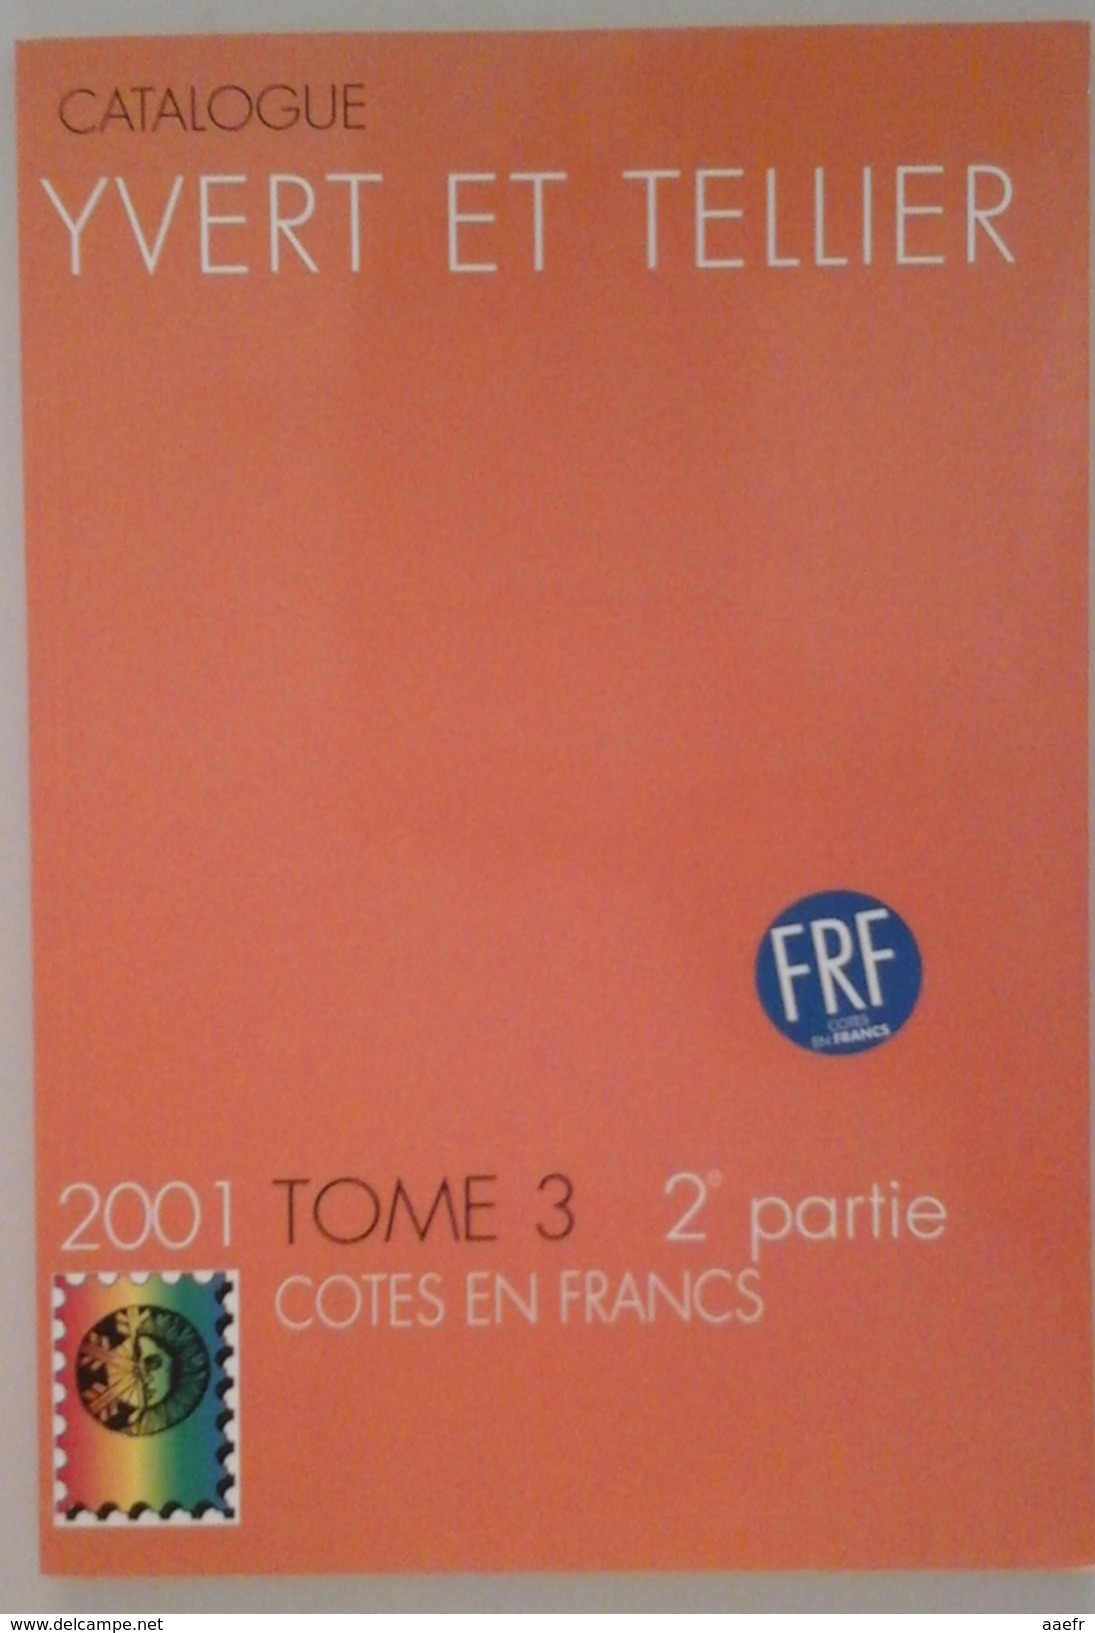 2001 - Tome 3 - Yvert Et Tellier - Conversion - Cotes En Francs/euros - Frankrijk